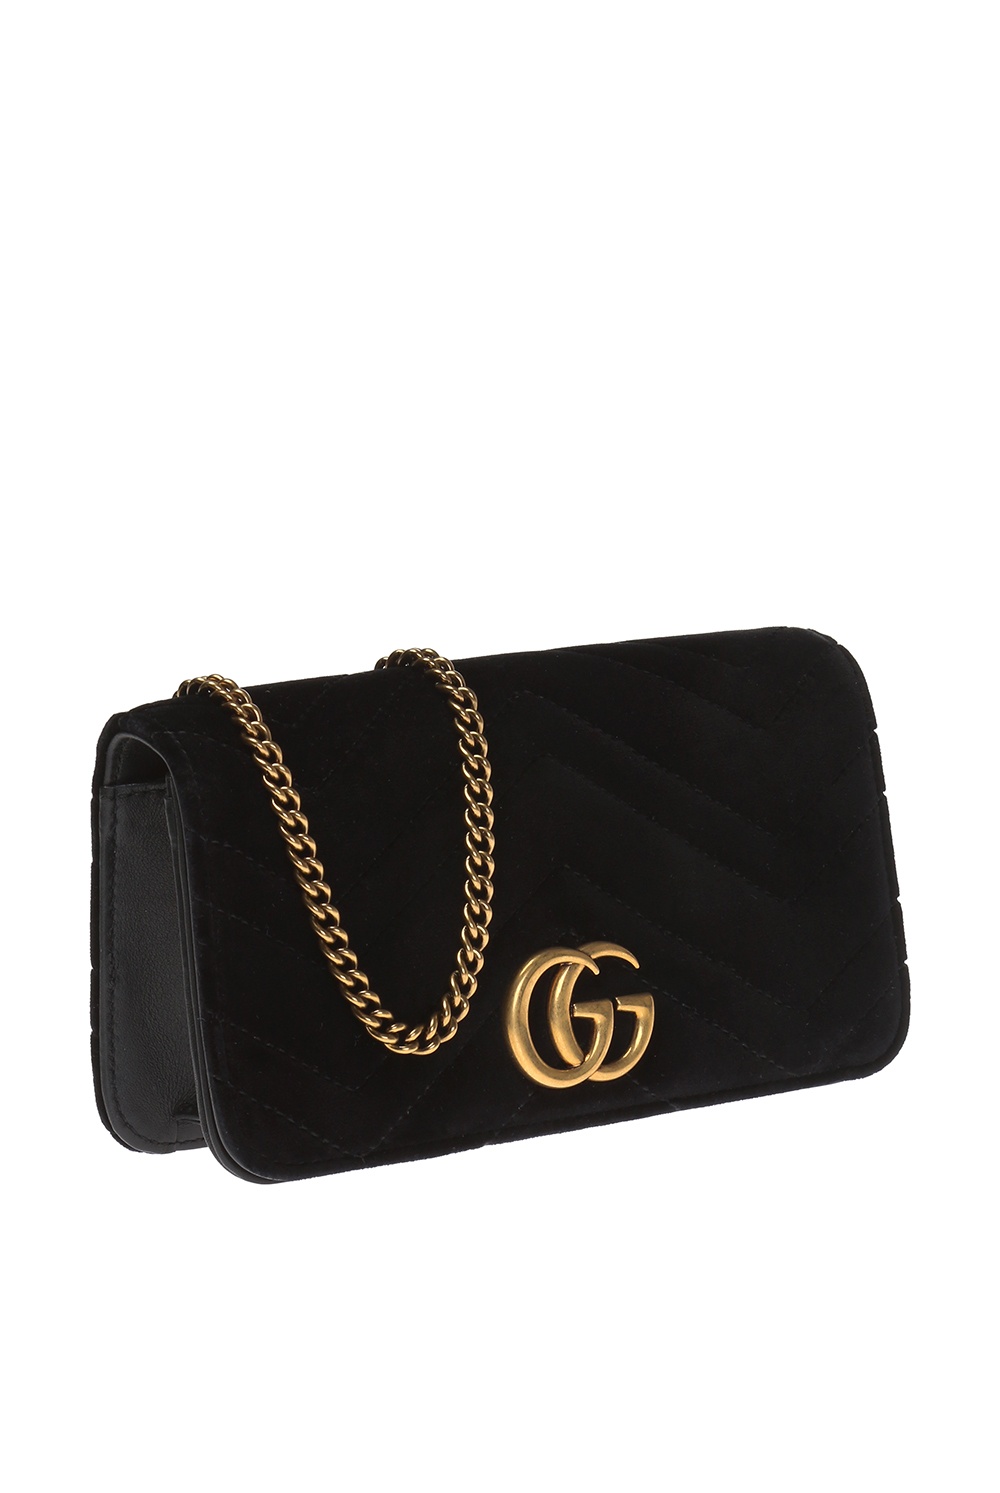 GG Marmont' shoulder bag Gucci - Vitkac HK